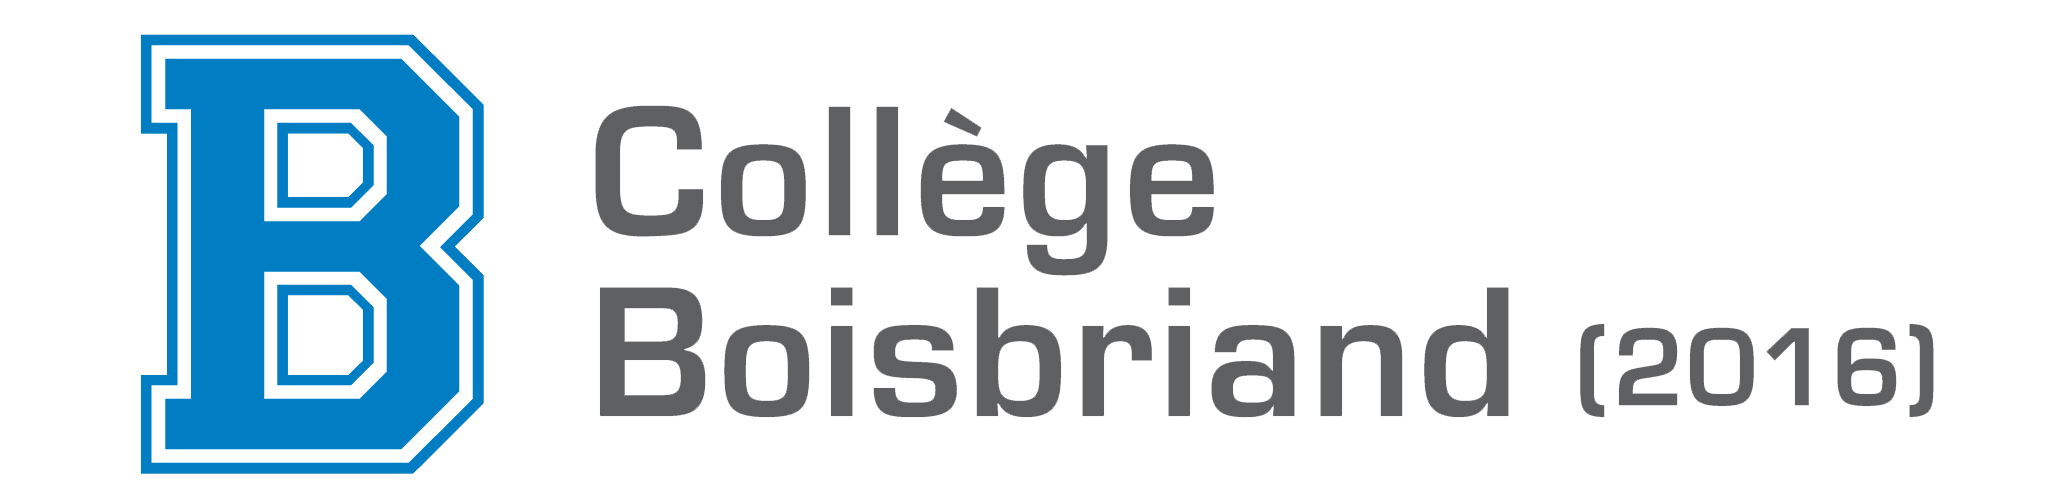 logo_collegeboisbriand-2016-copie